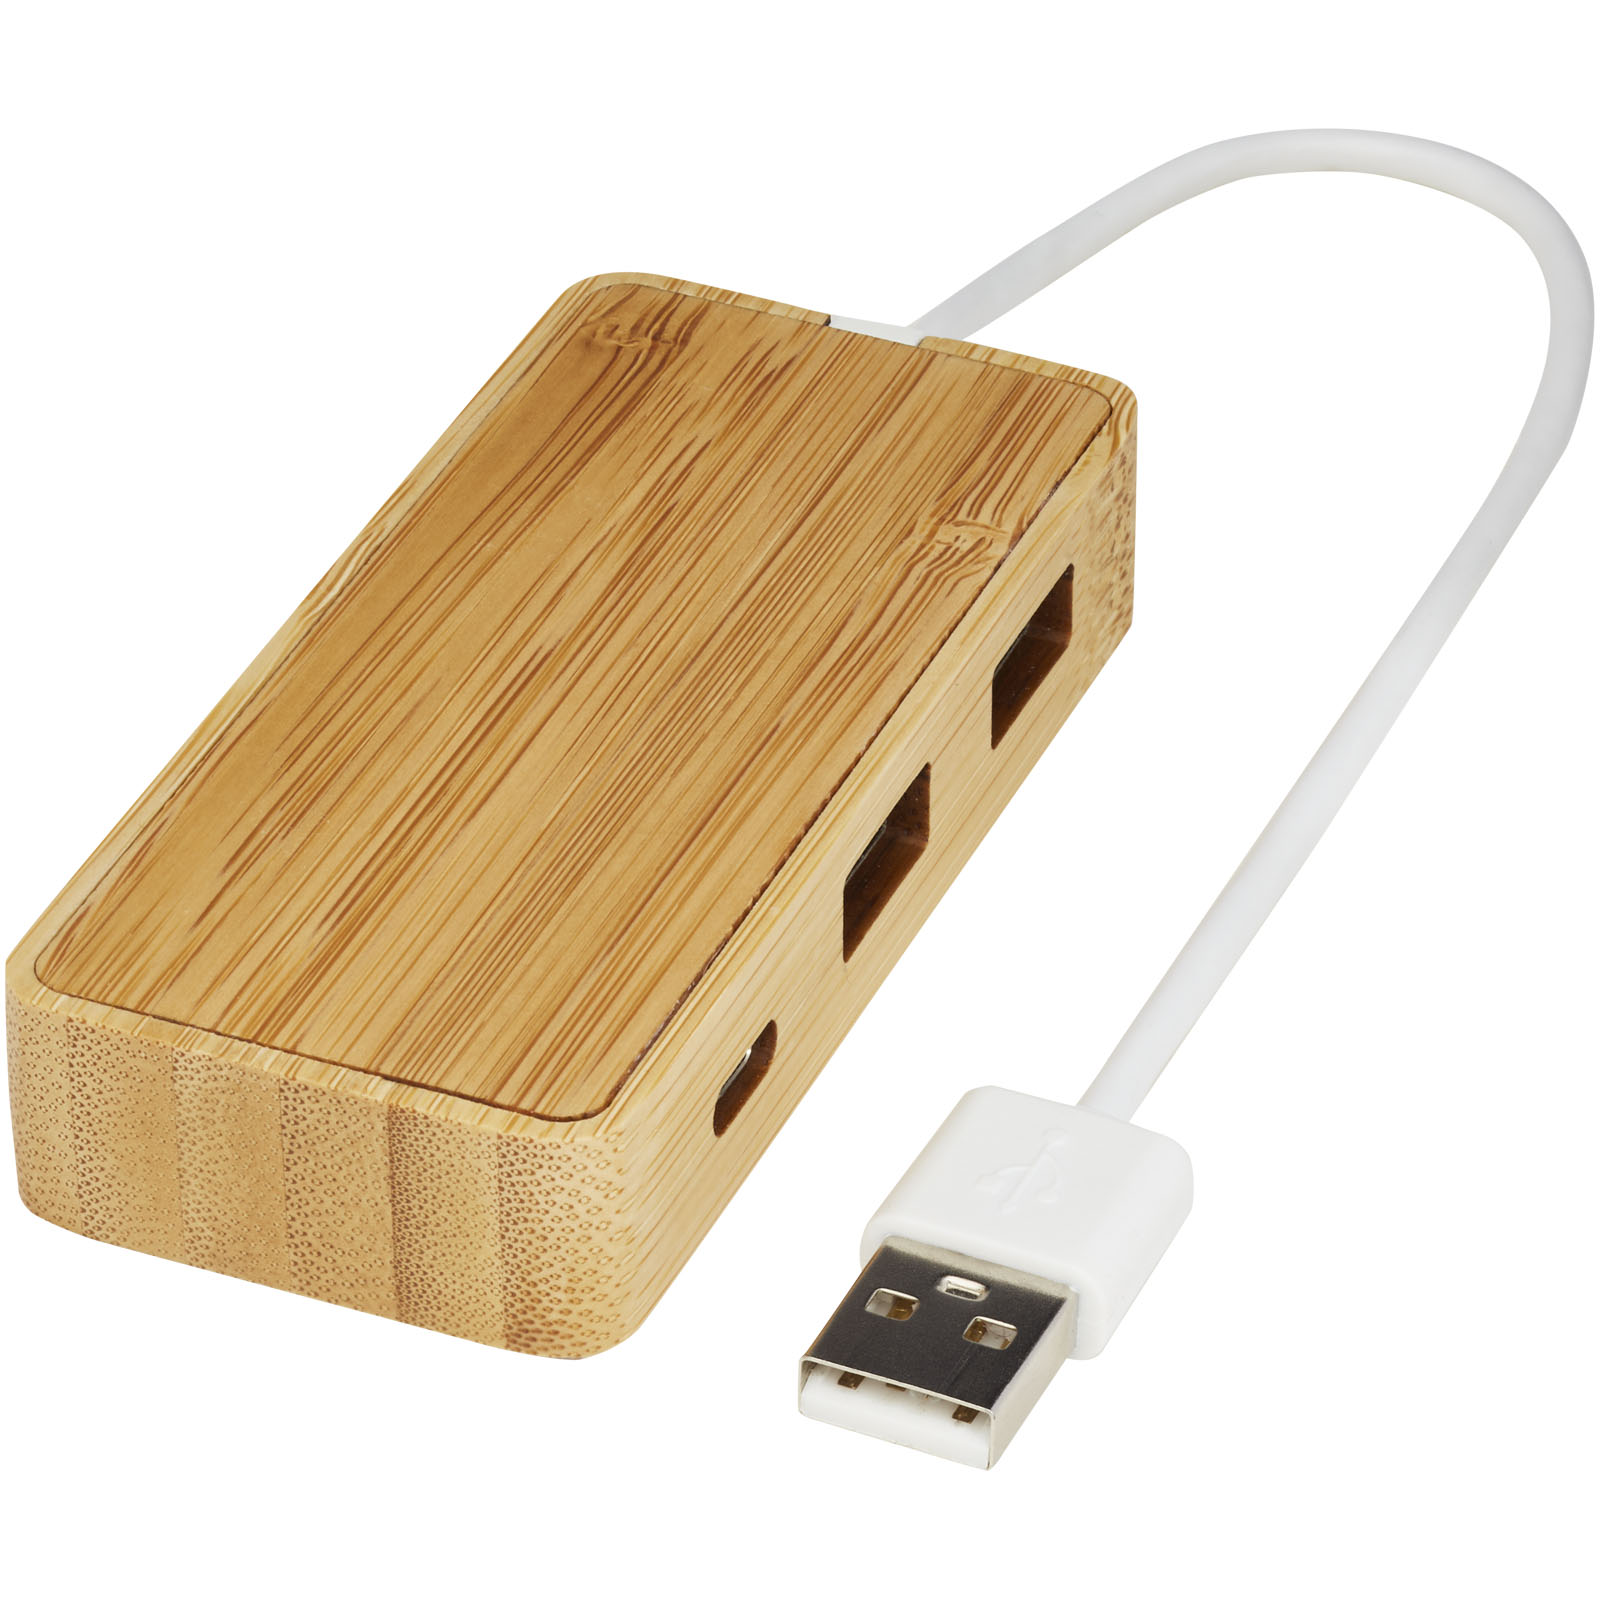 Tapas USB hub i bambus